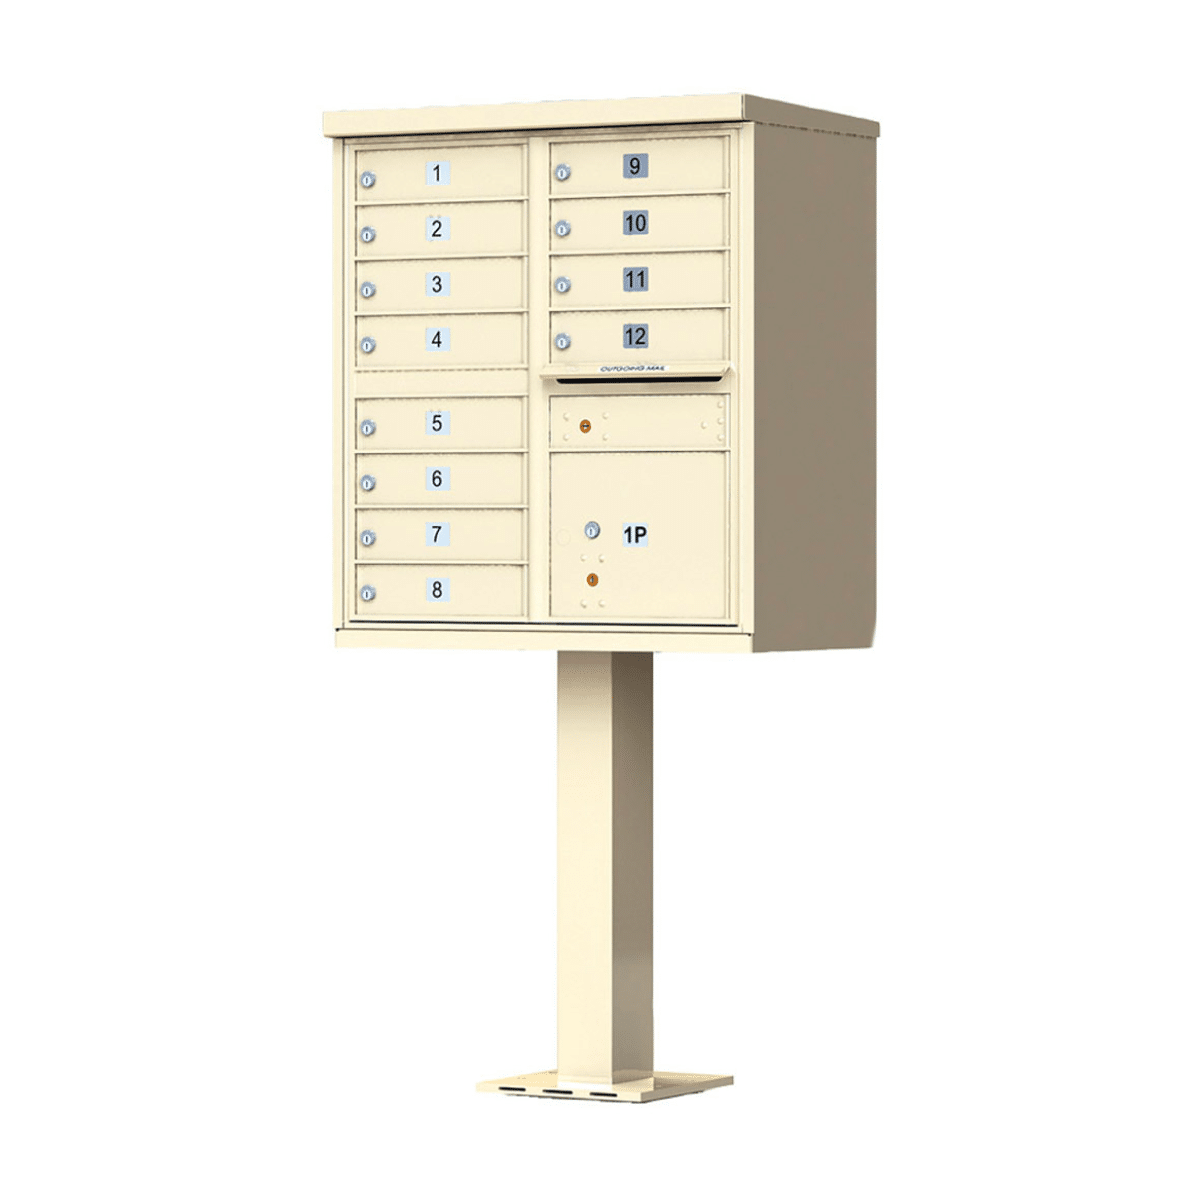 Florence CBU Cluster Mailbox - 12 Tenant Doors, 1 Parcel Locker Featured Image